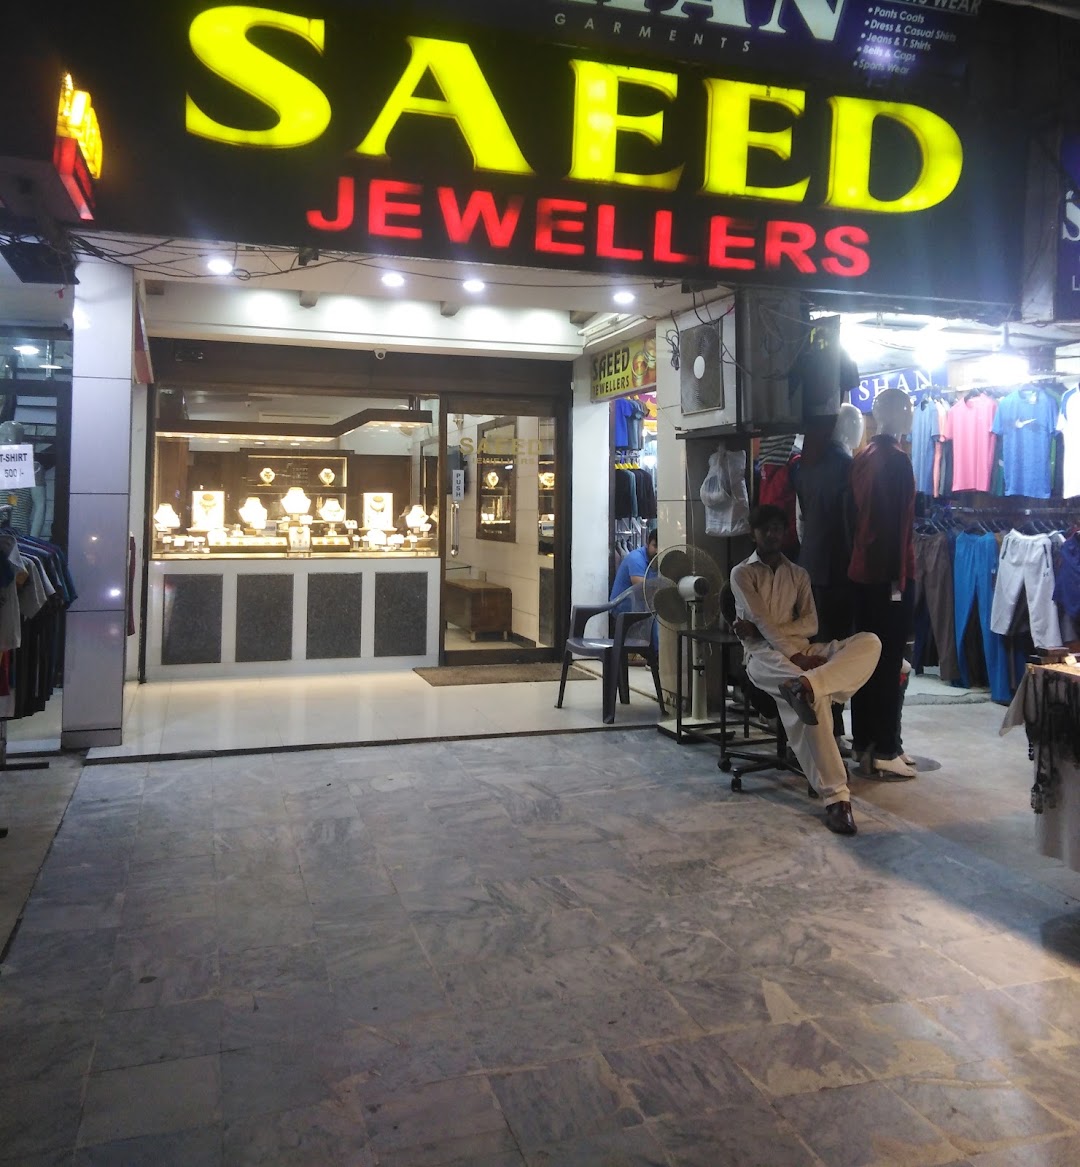 Saeed Jewellers